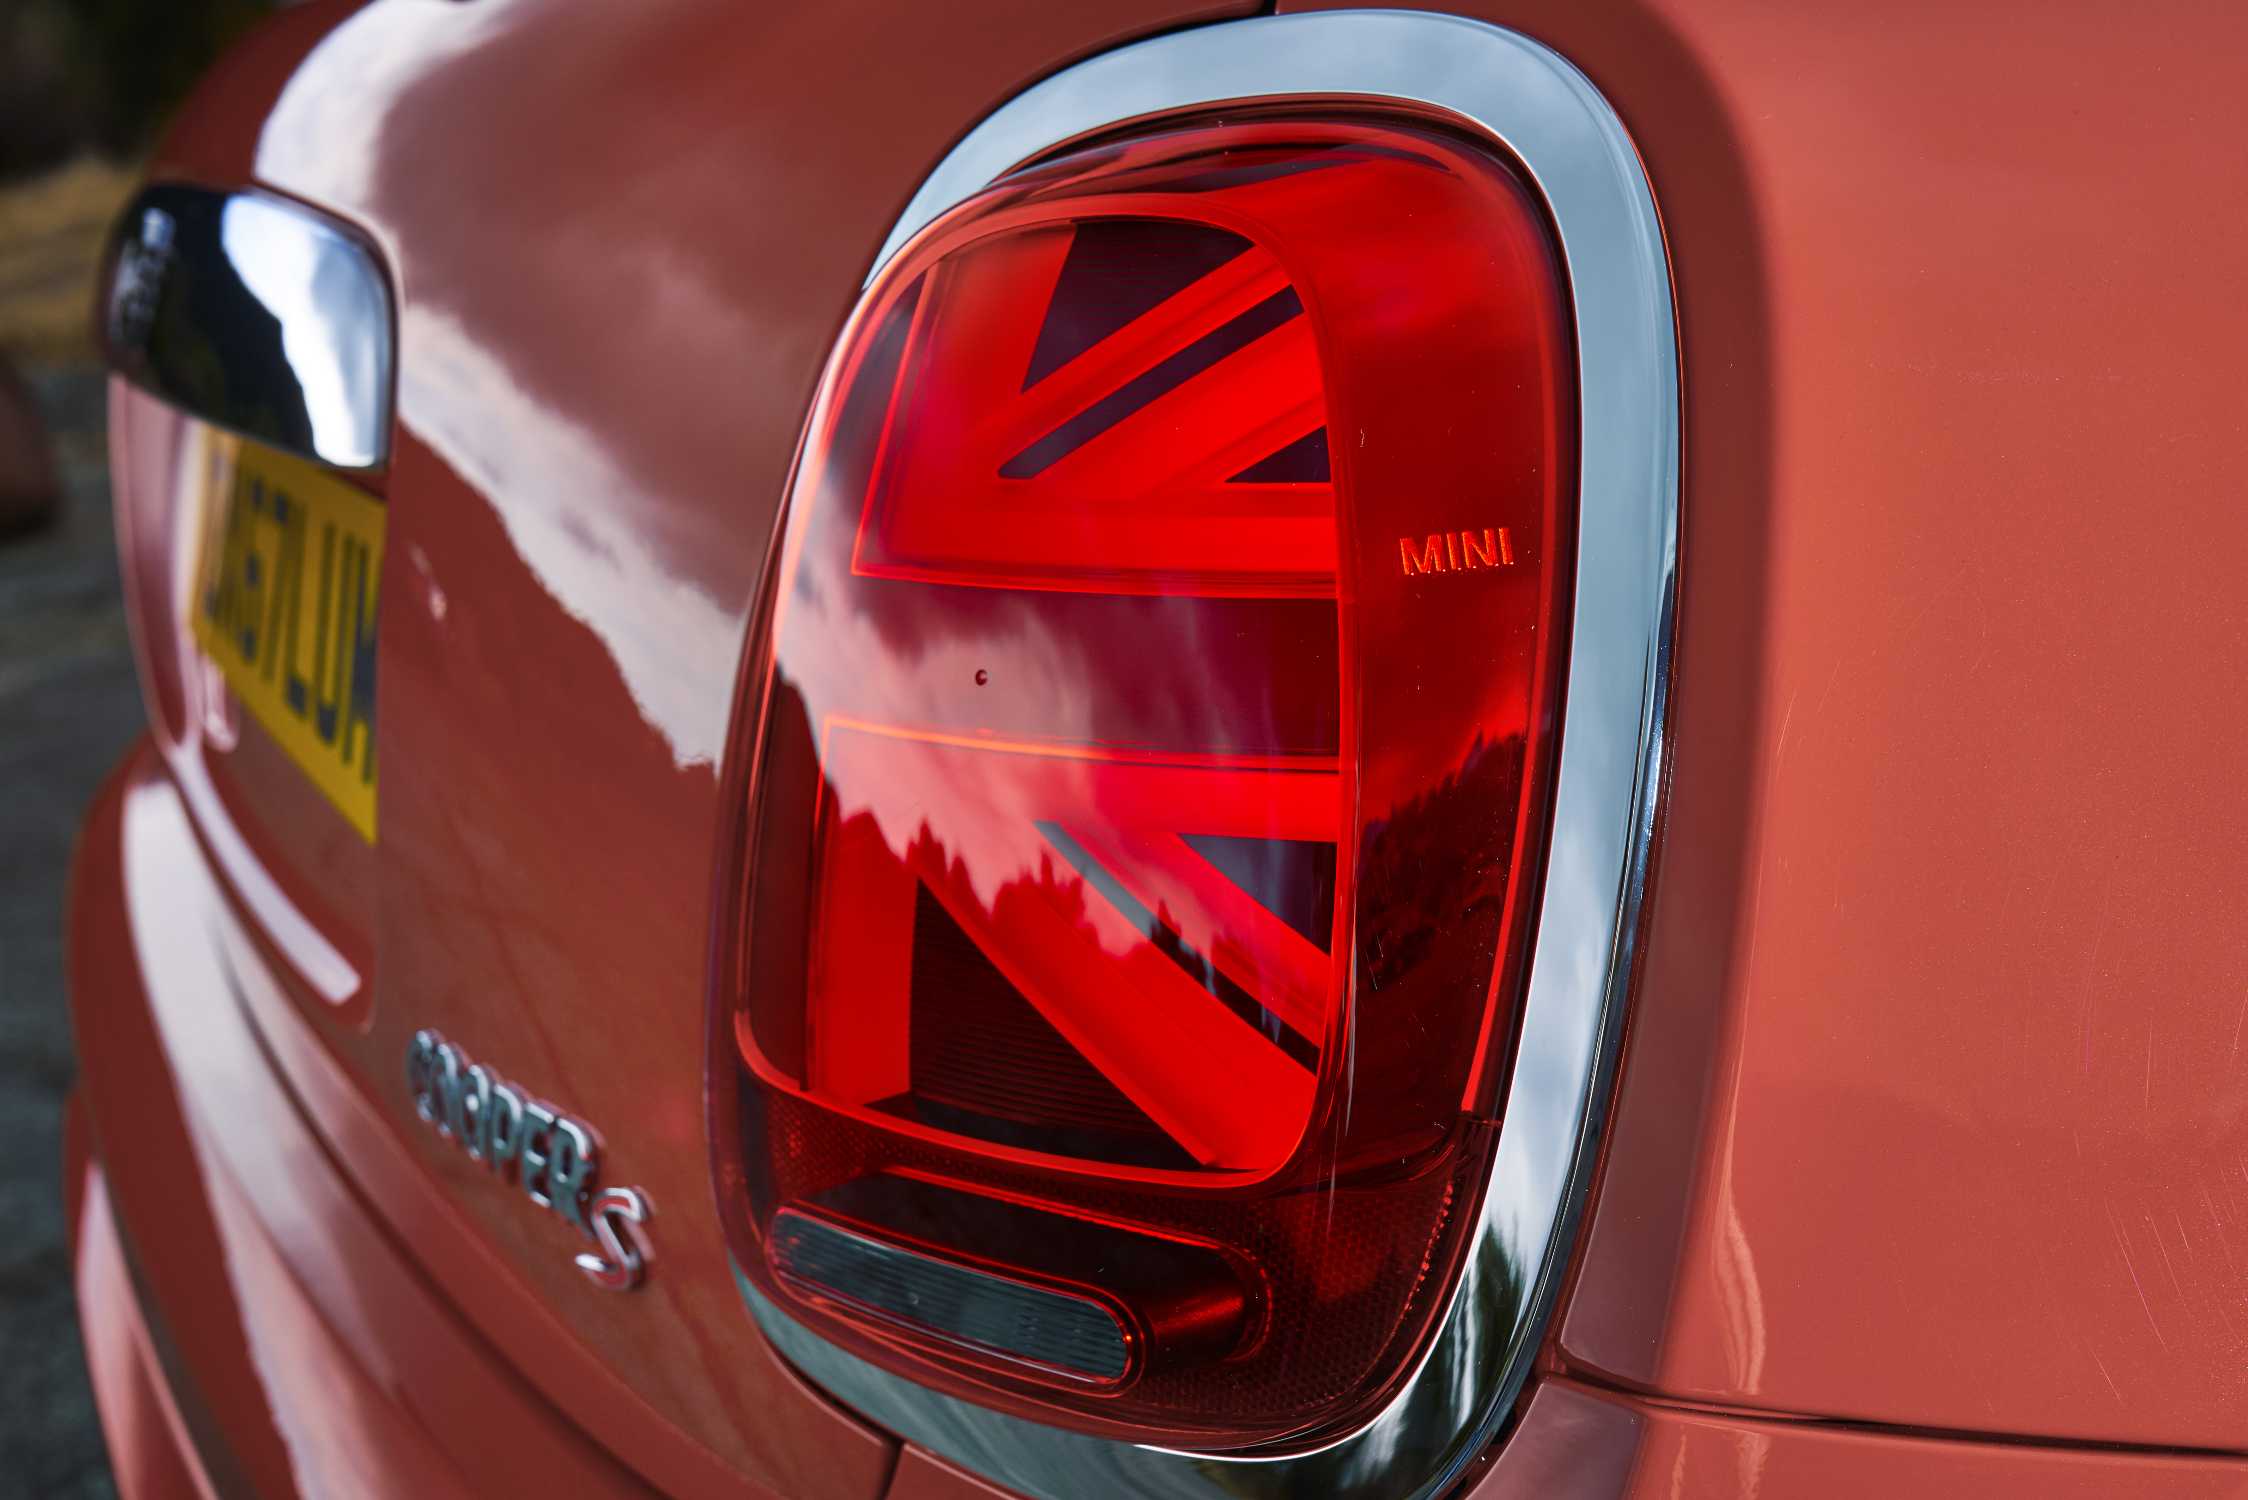 MINI LED rear lights in Union Jack design. (01/2018)